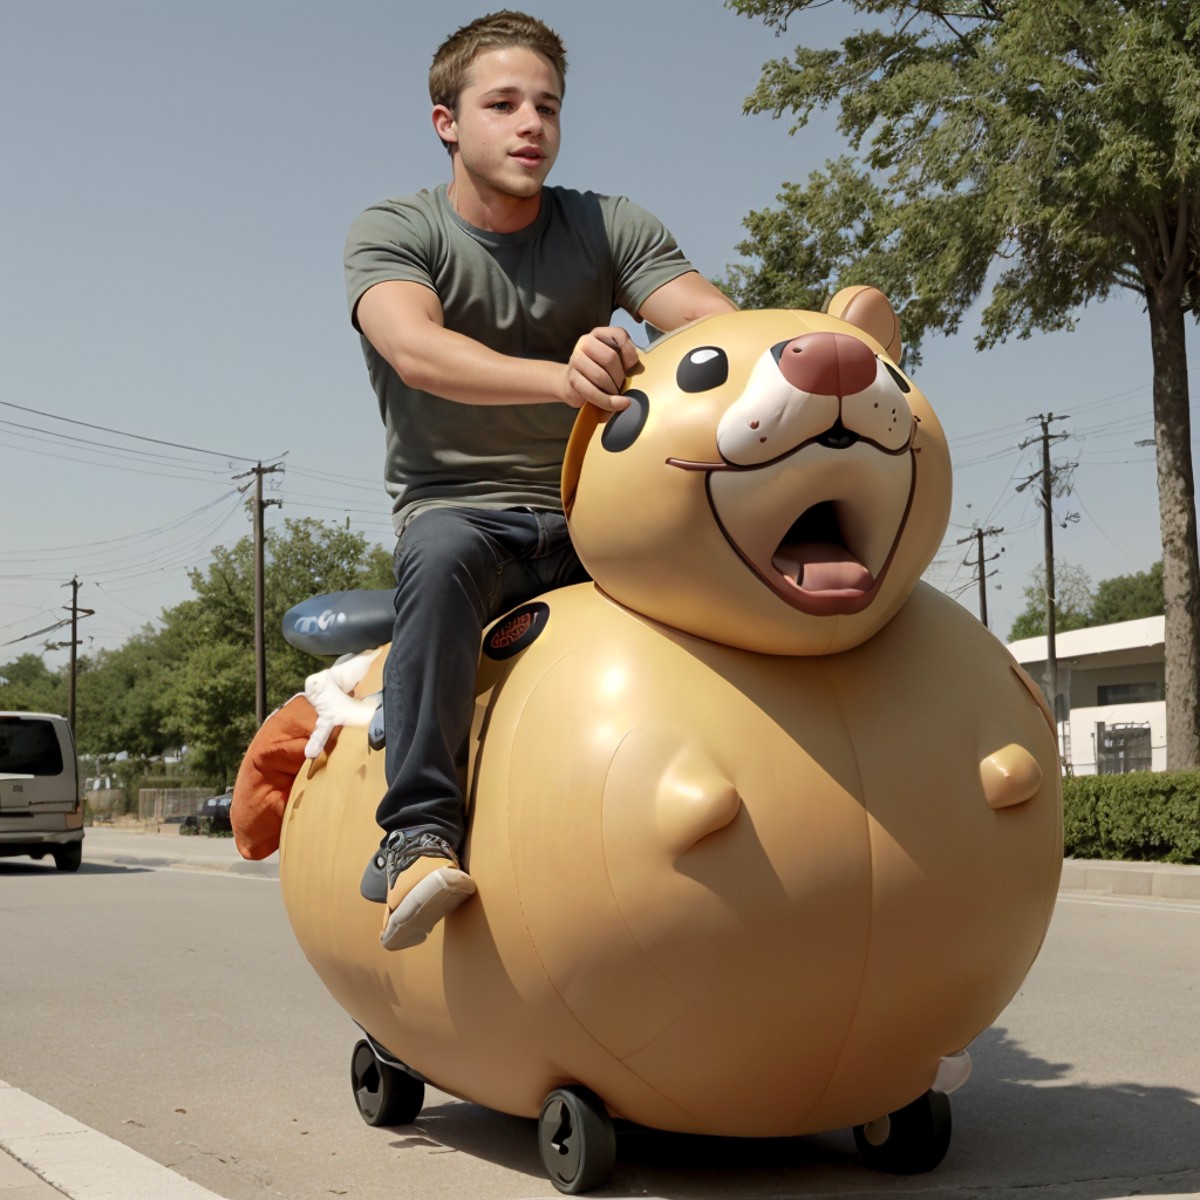 Determined, slim man dg_ShawnPyfrom riding on a giant hamster , <lora:dg_ShawnPyfrom-v1:0.8>,